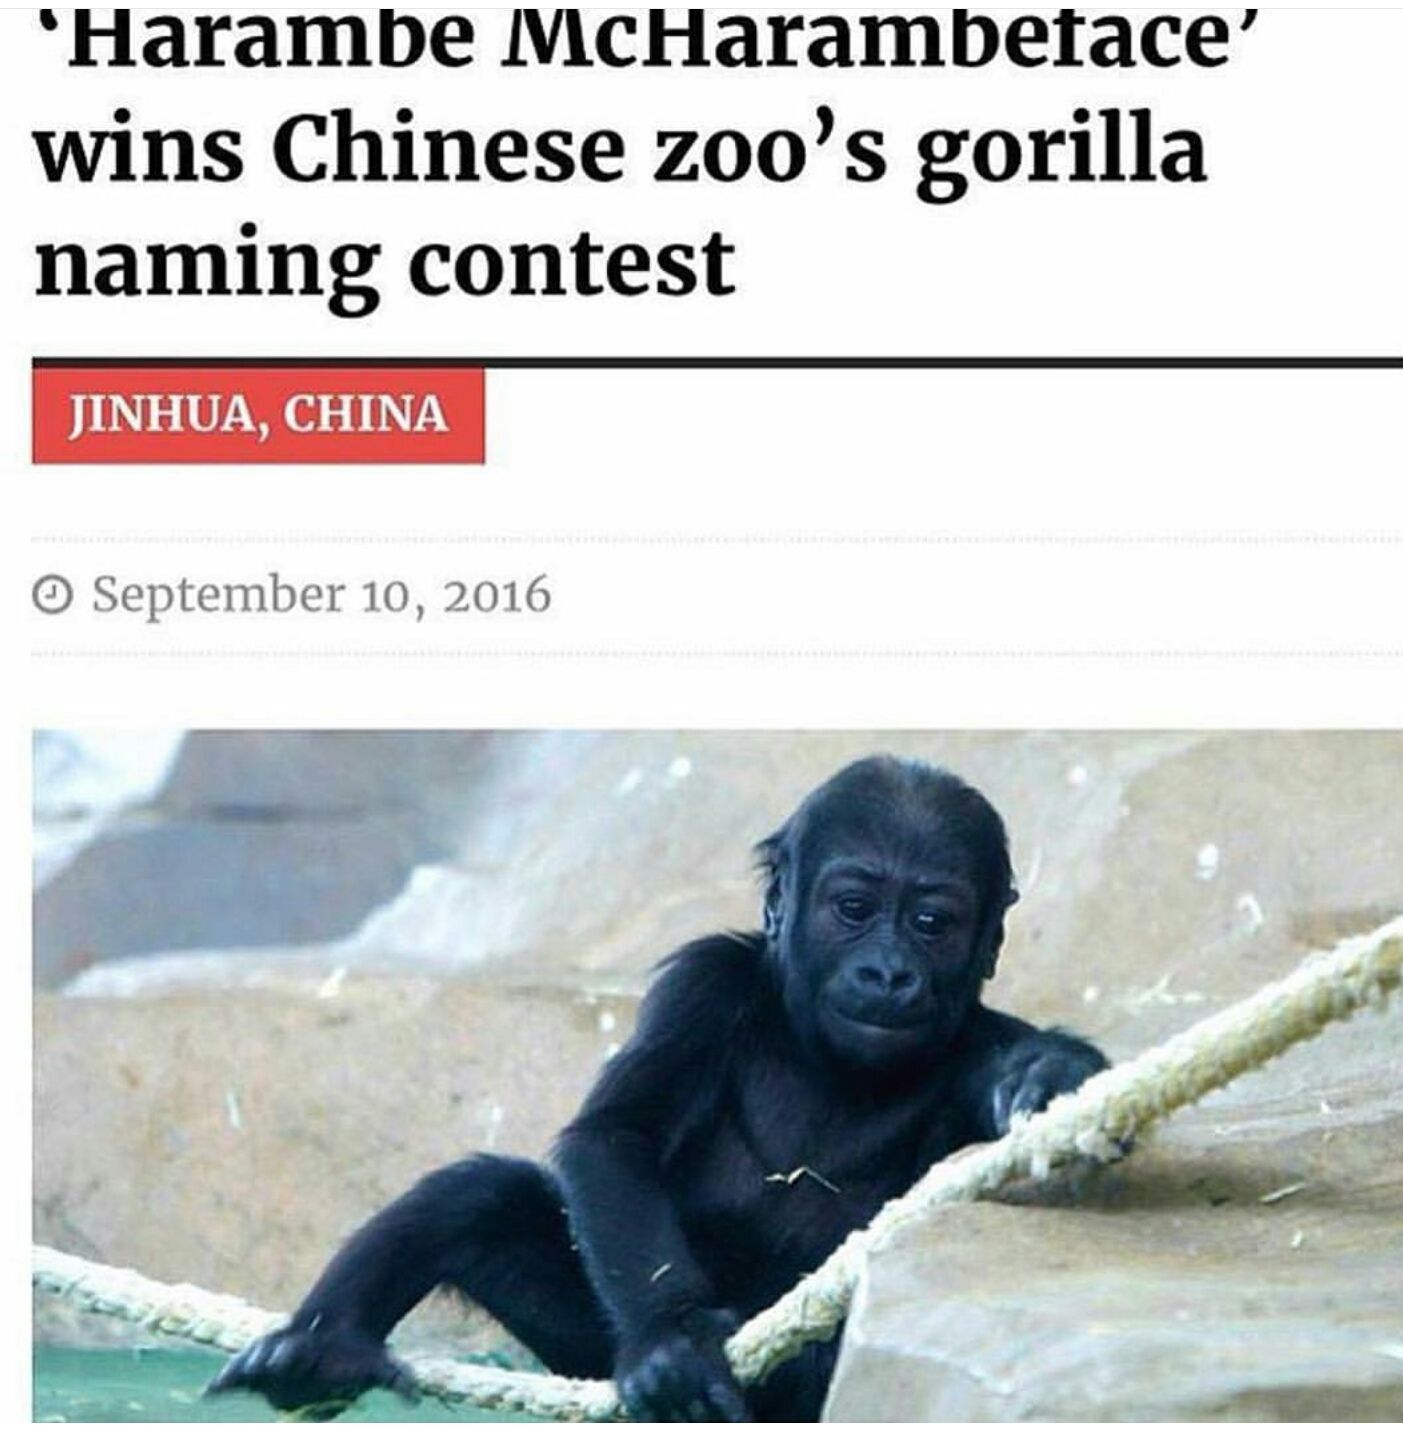 Harambe mcharambeface wins gorilla naming contest